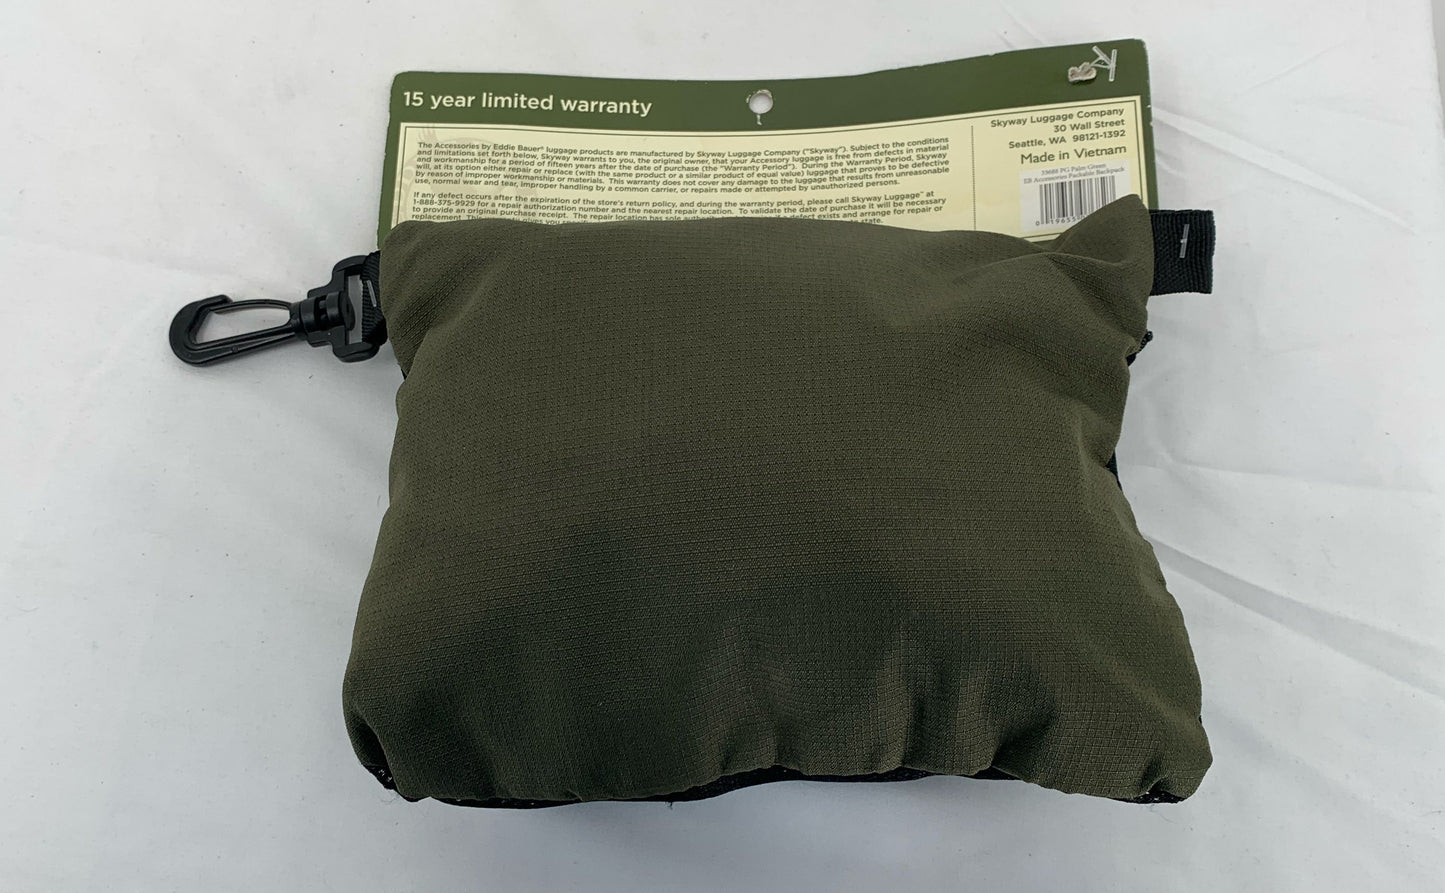 Eddie Bauer Palm Green Lightweight Packable Backpack Adjustable Straps 33688